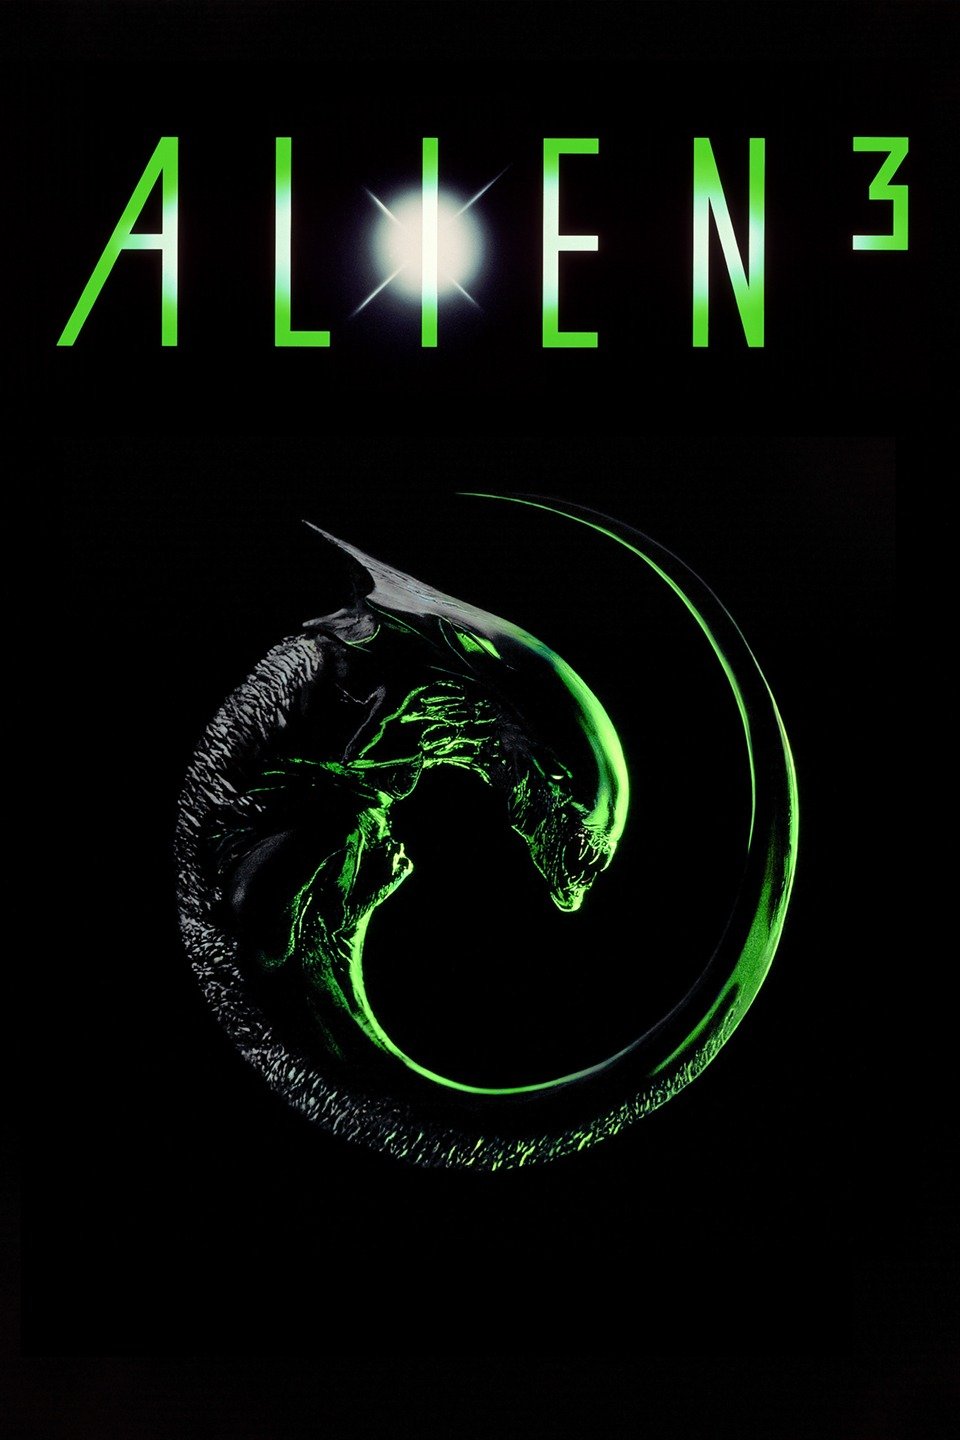 Alien3 1992 movie cover